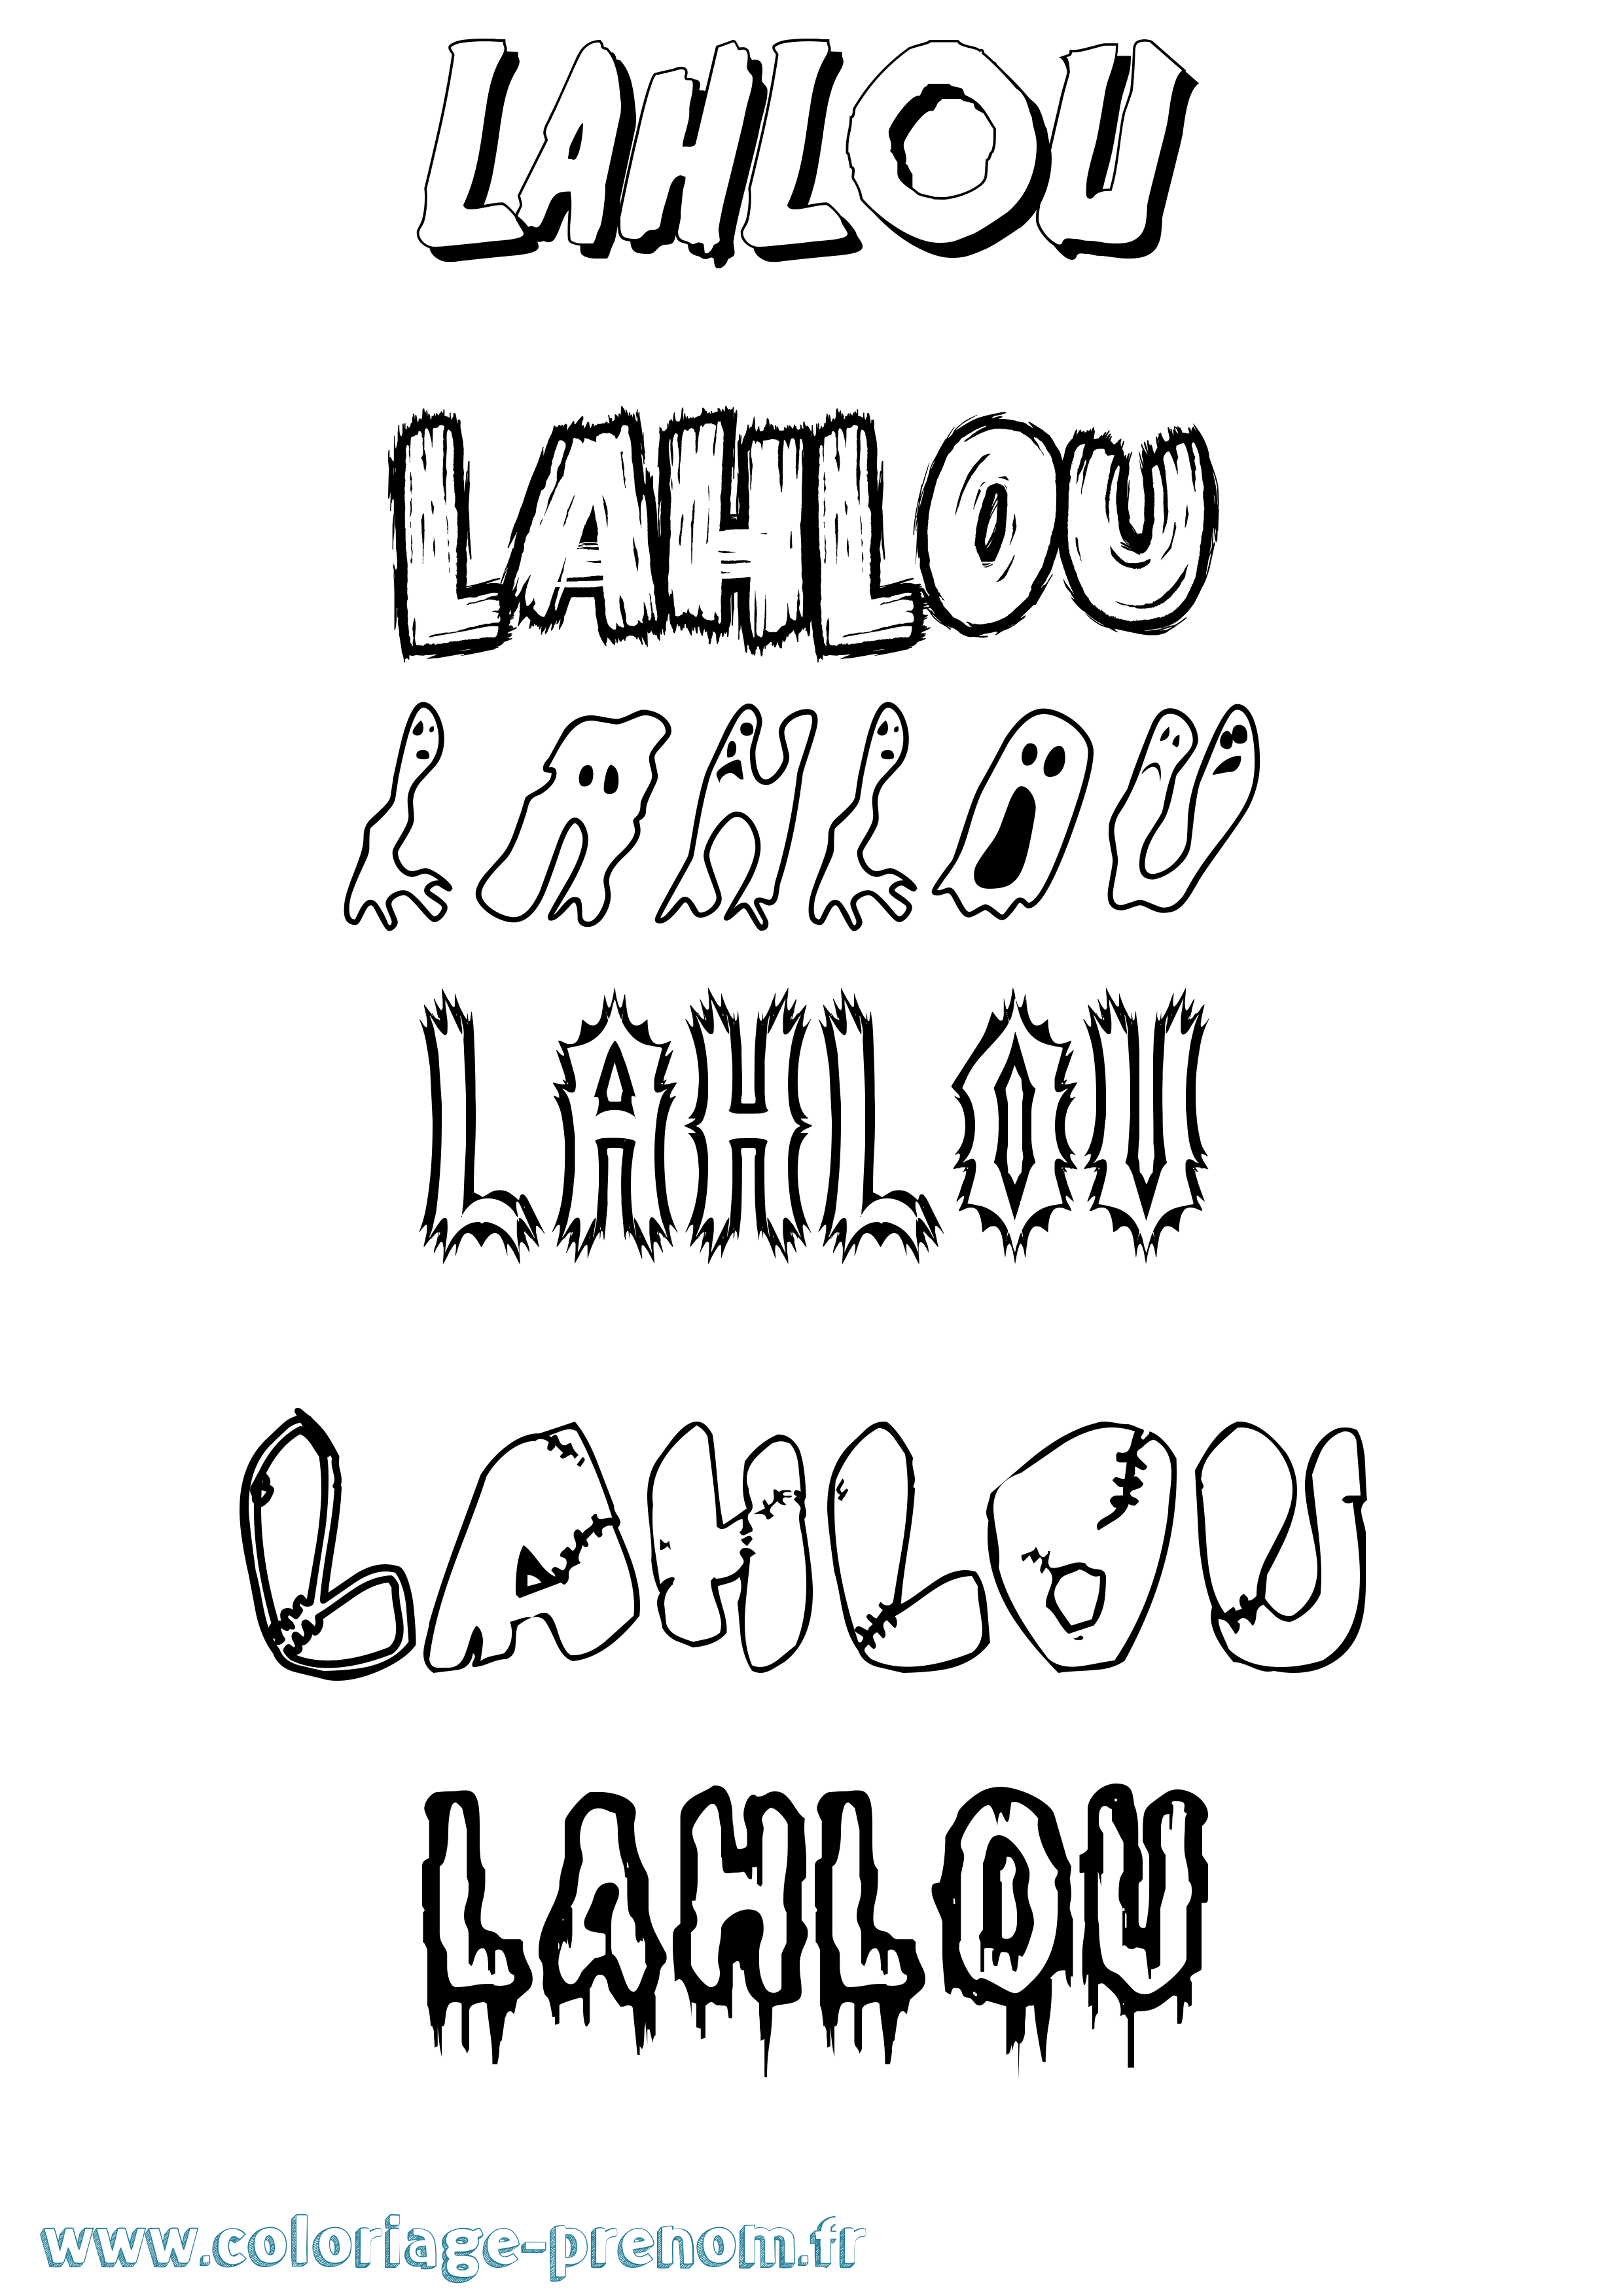 Coloriage prénom Lahlou Frisson